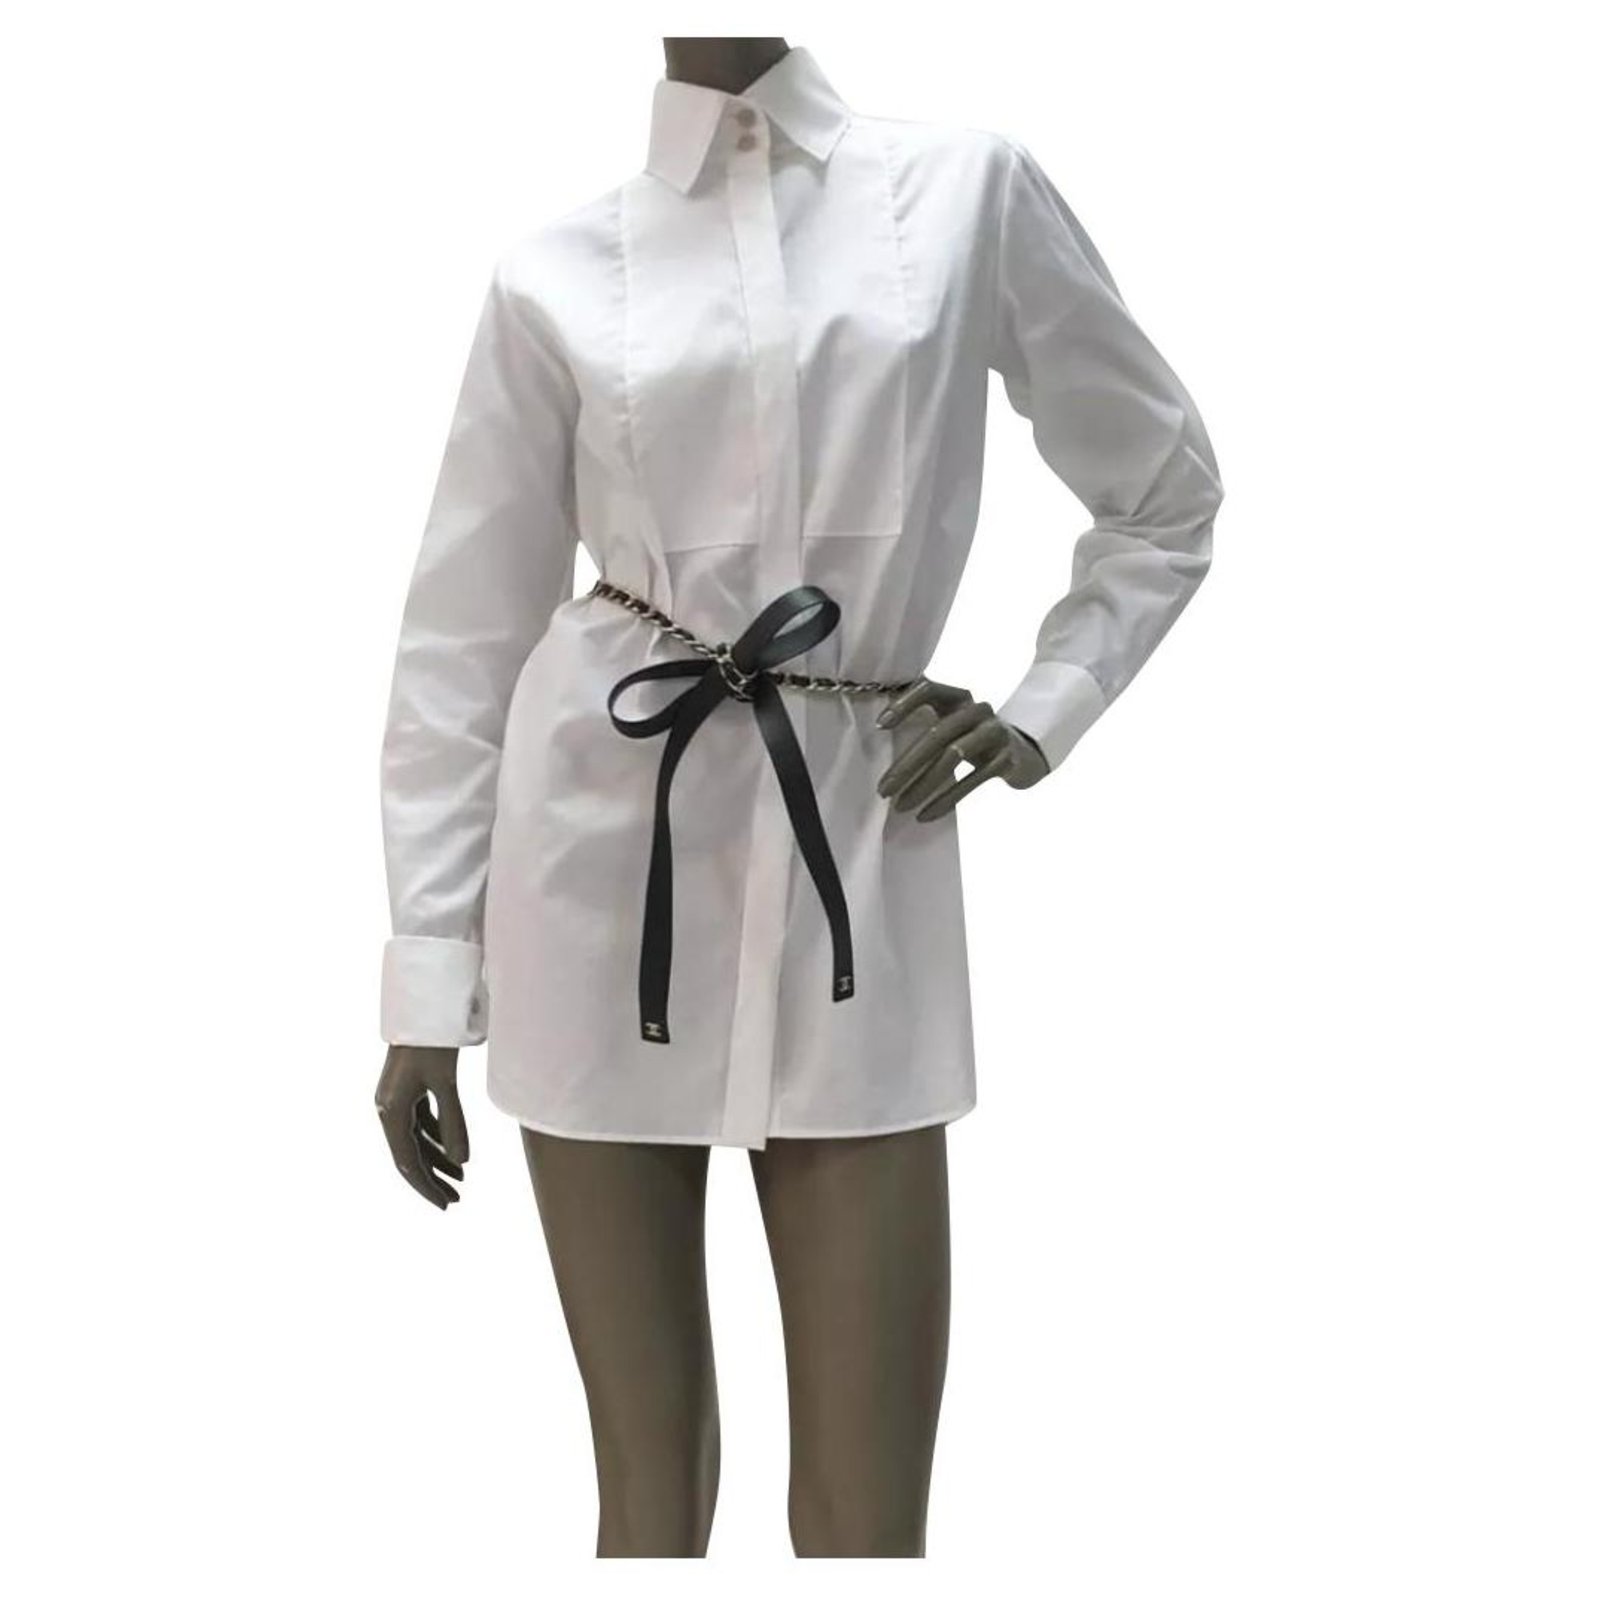 Chanel white cotton lace trim shirt 34 4